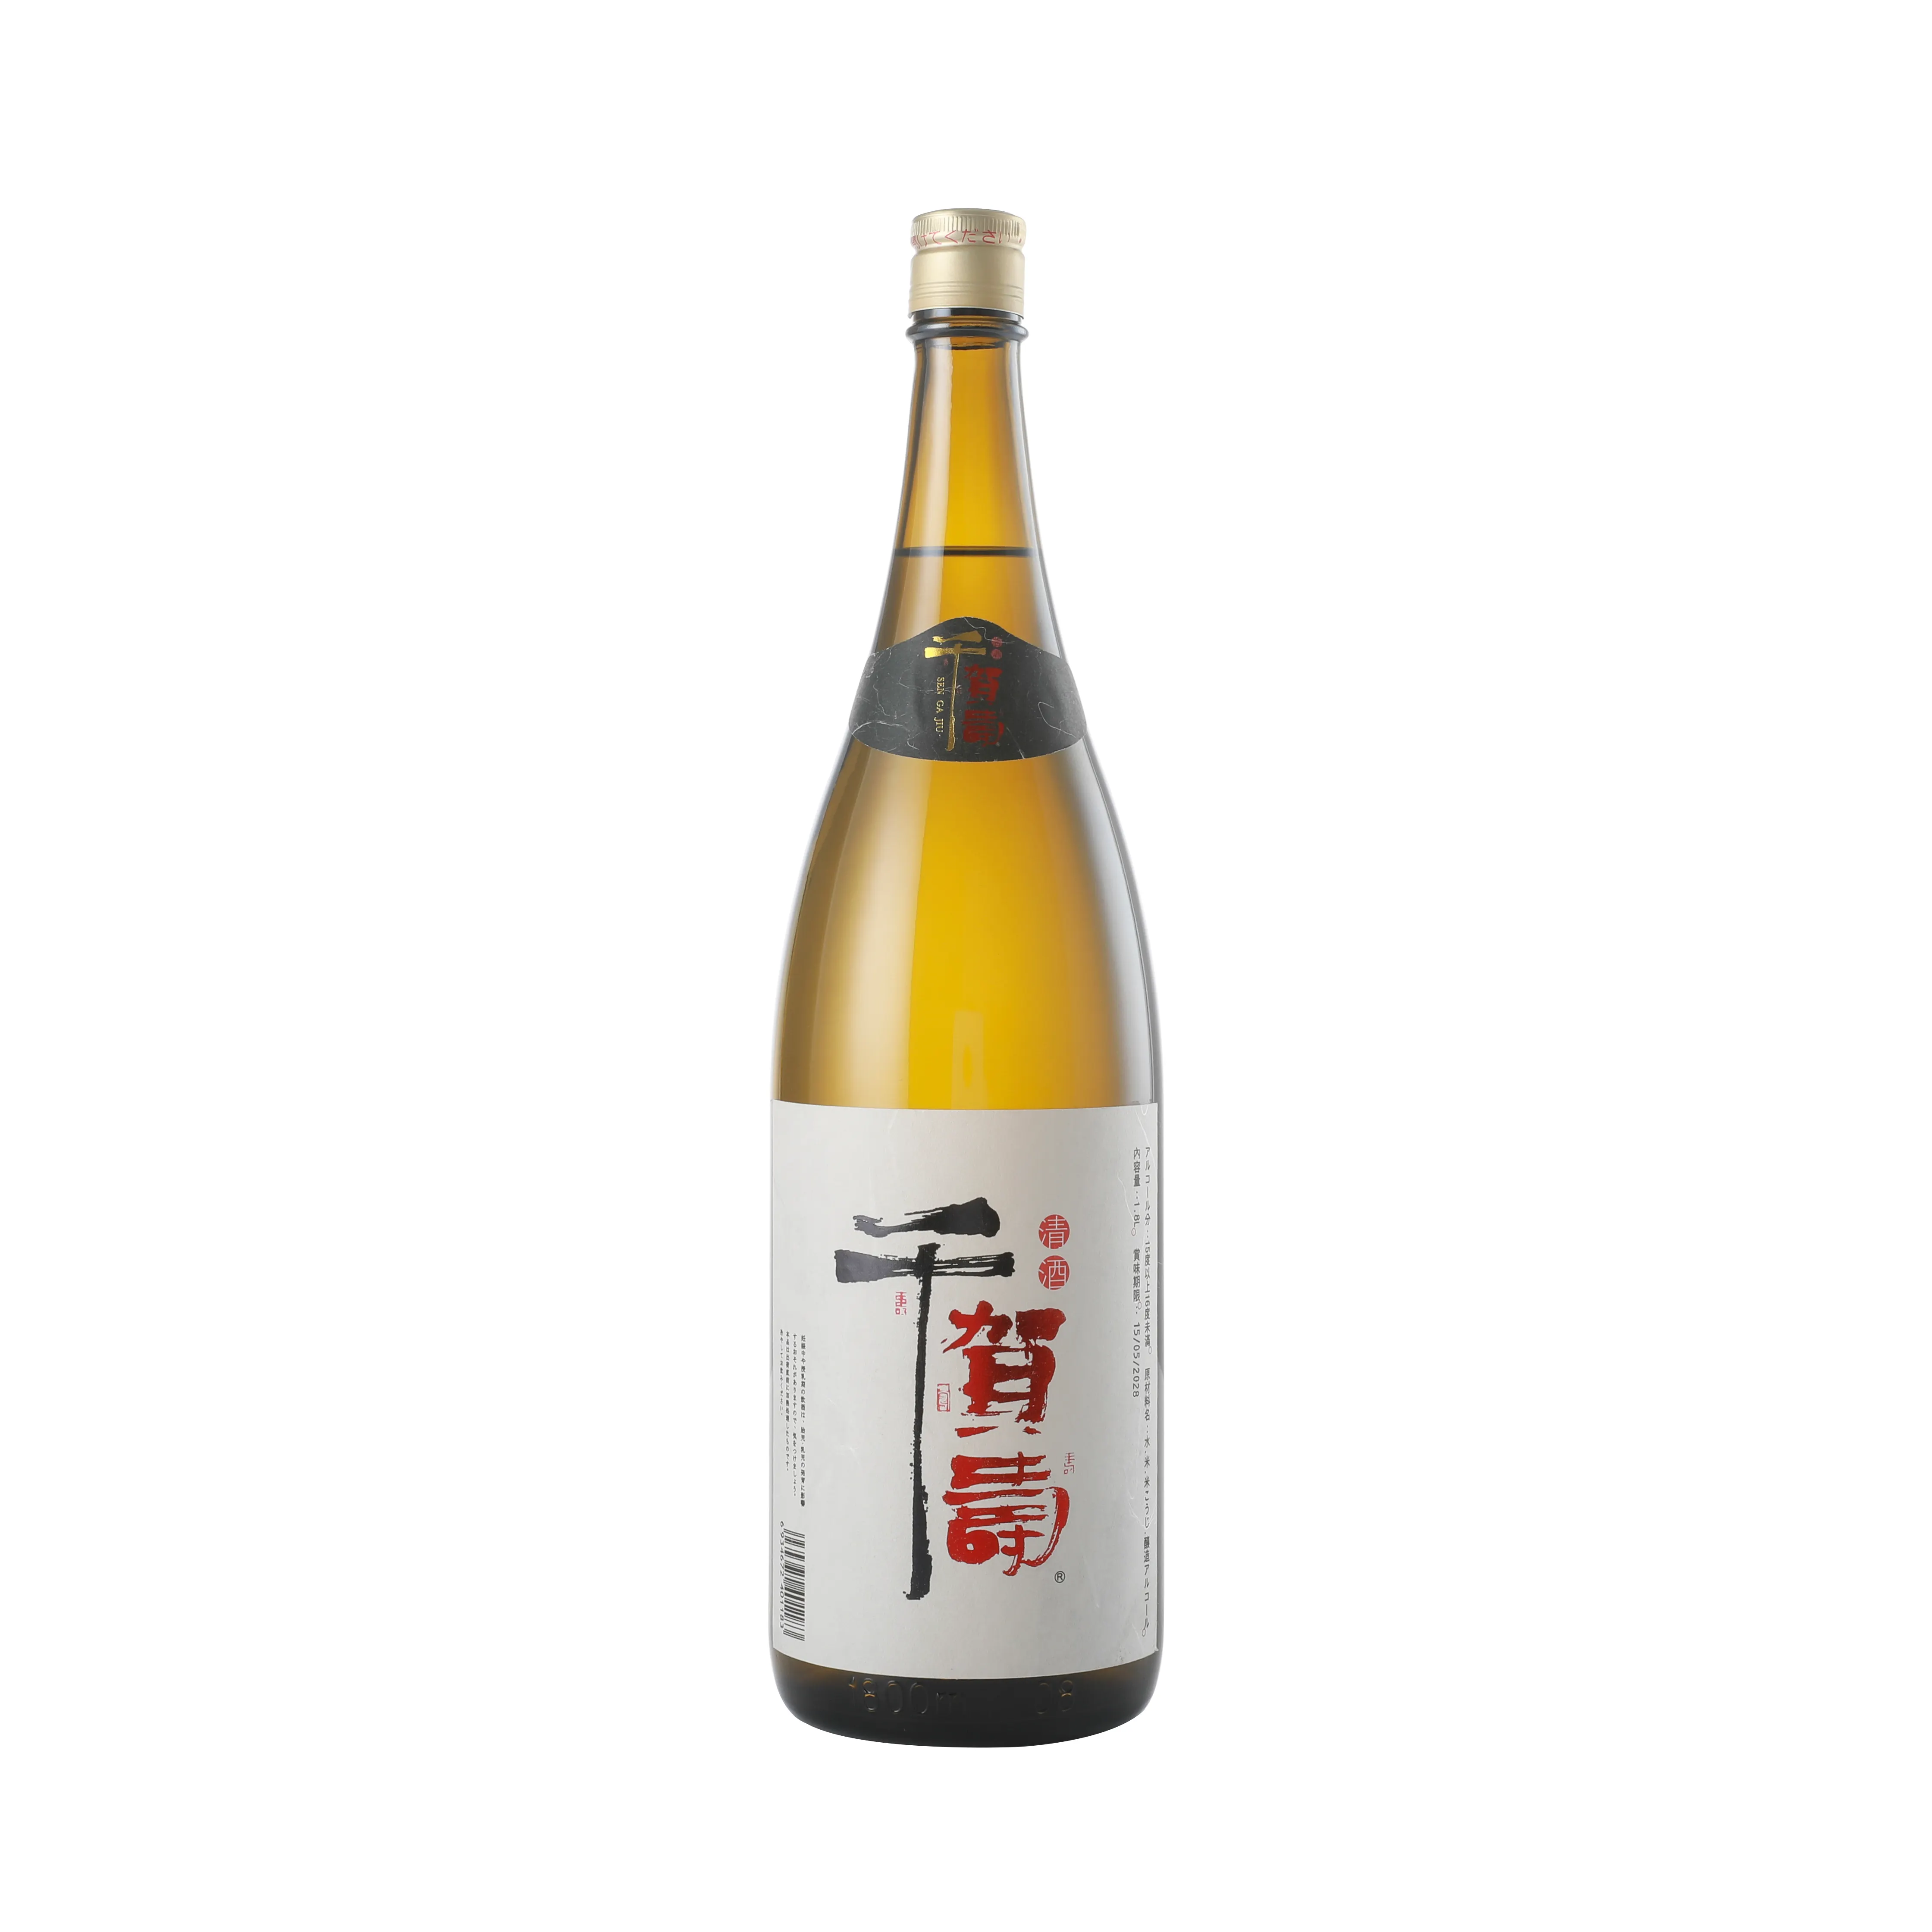 Bebida japonesa baja en alcohol, vino de arroz